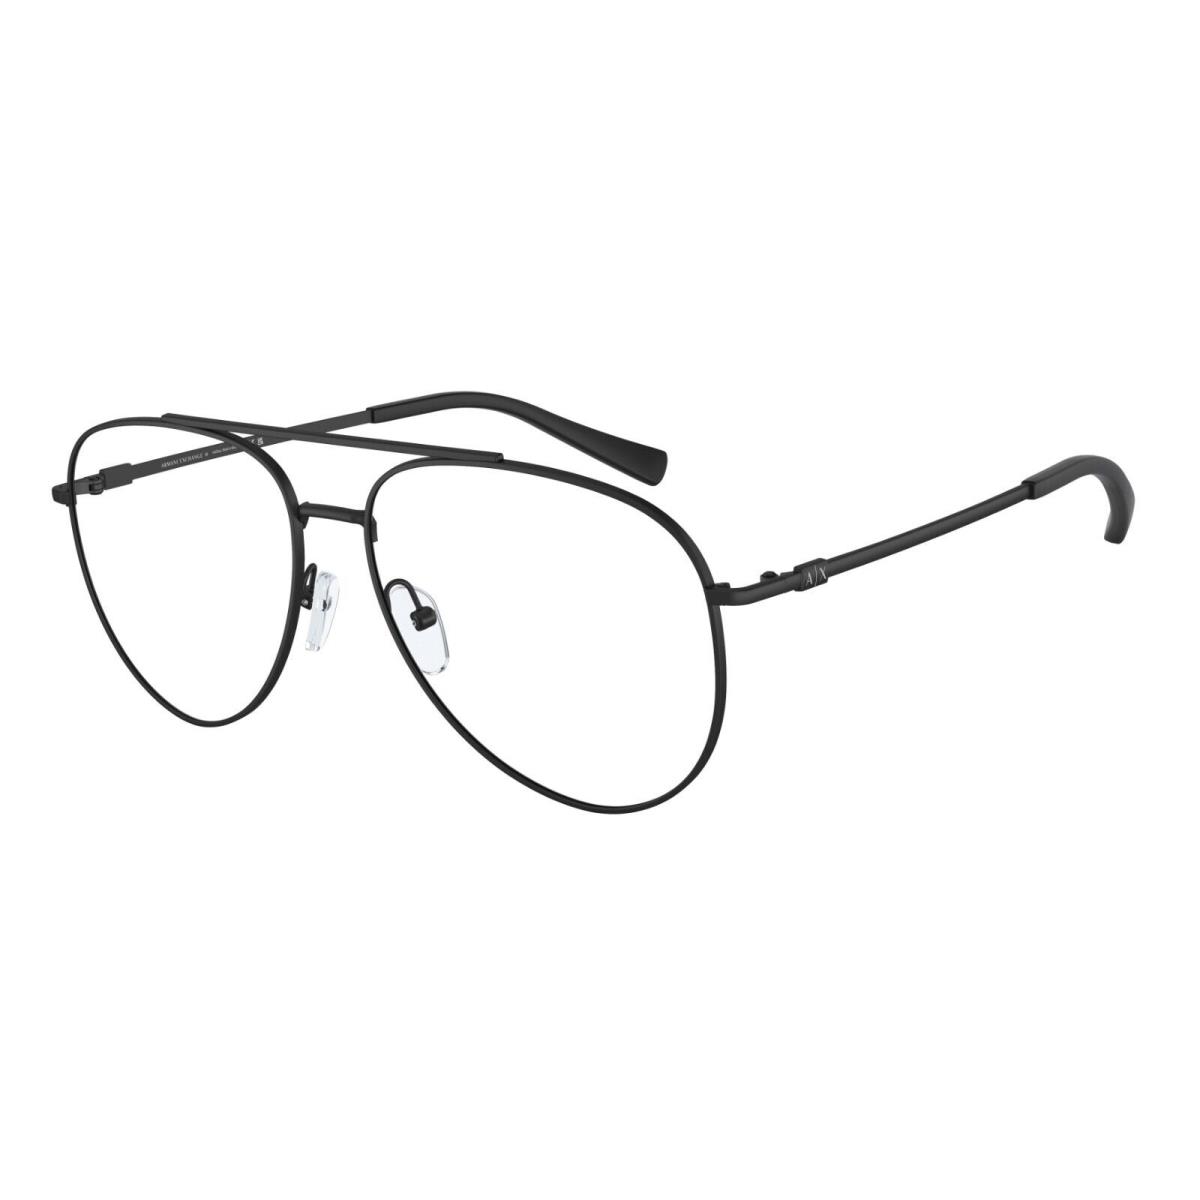 Armani Exchange Eyeglasses 0AX1055 6000 Mate Black Frame 58MM Rx-able